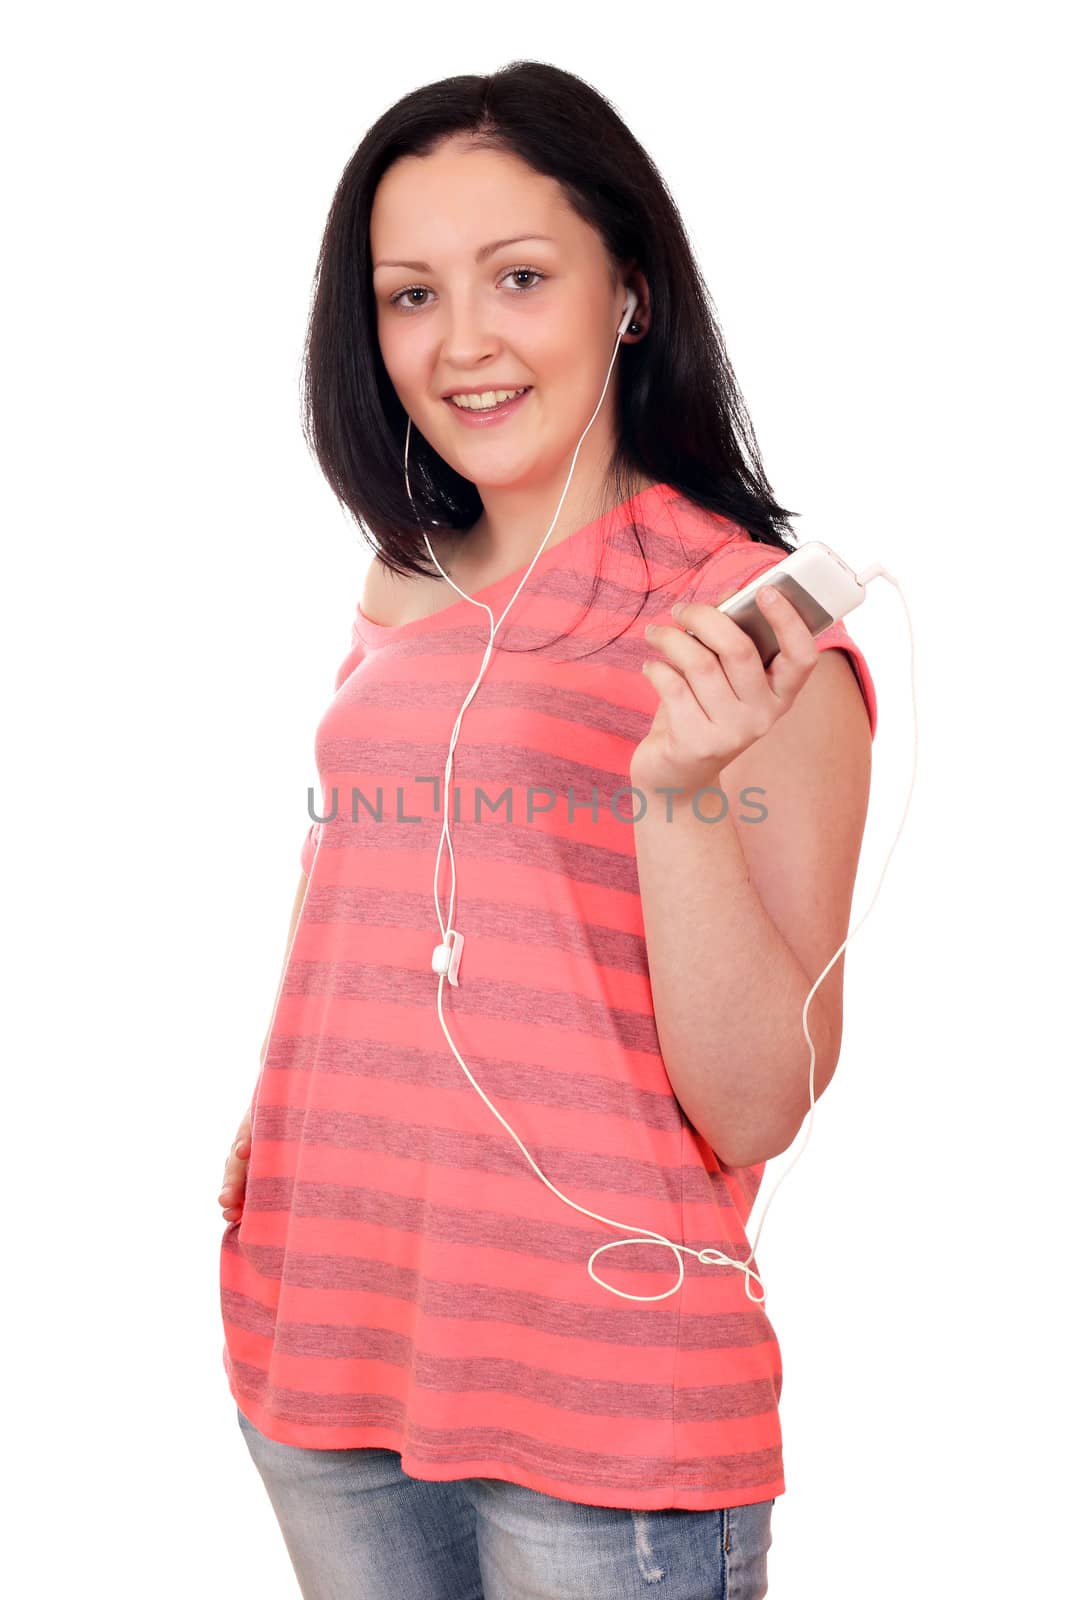 beautiful teenage girl listening music on phone by goce